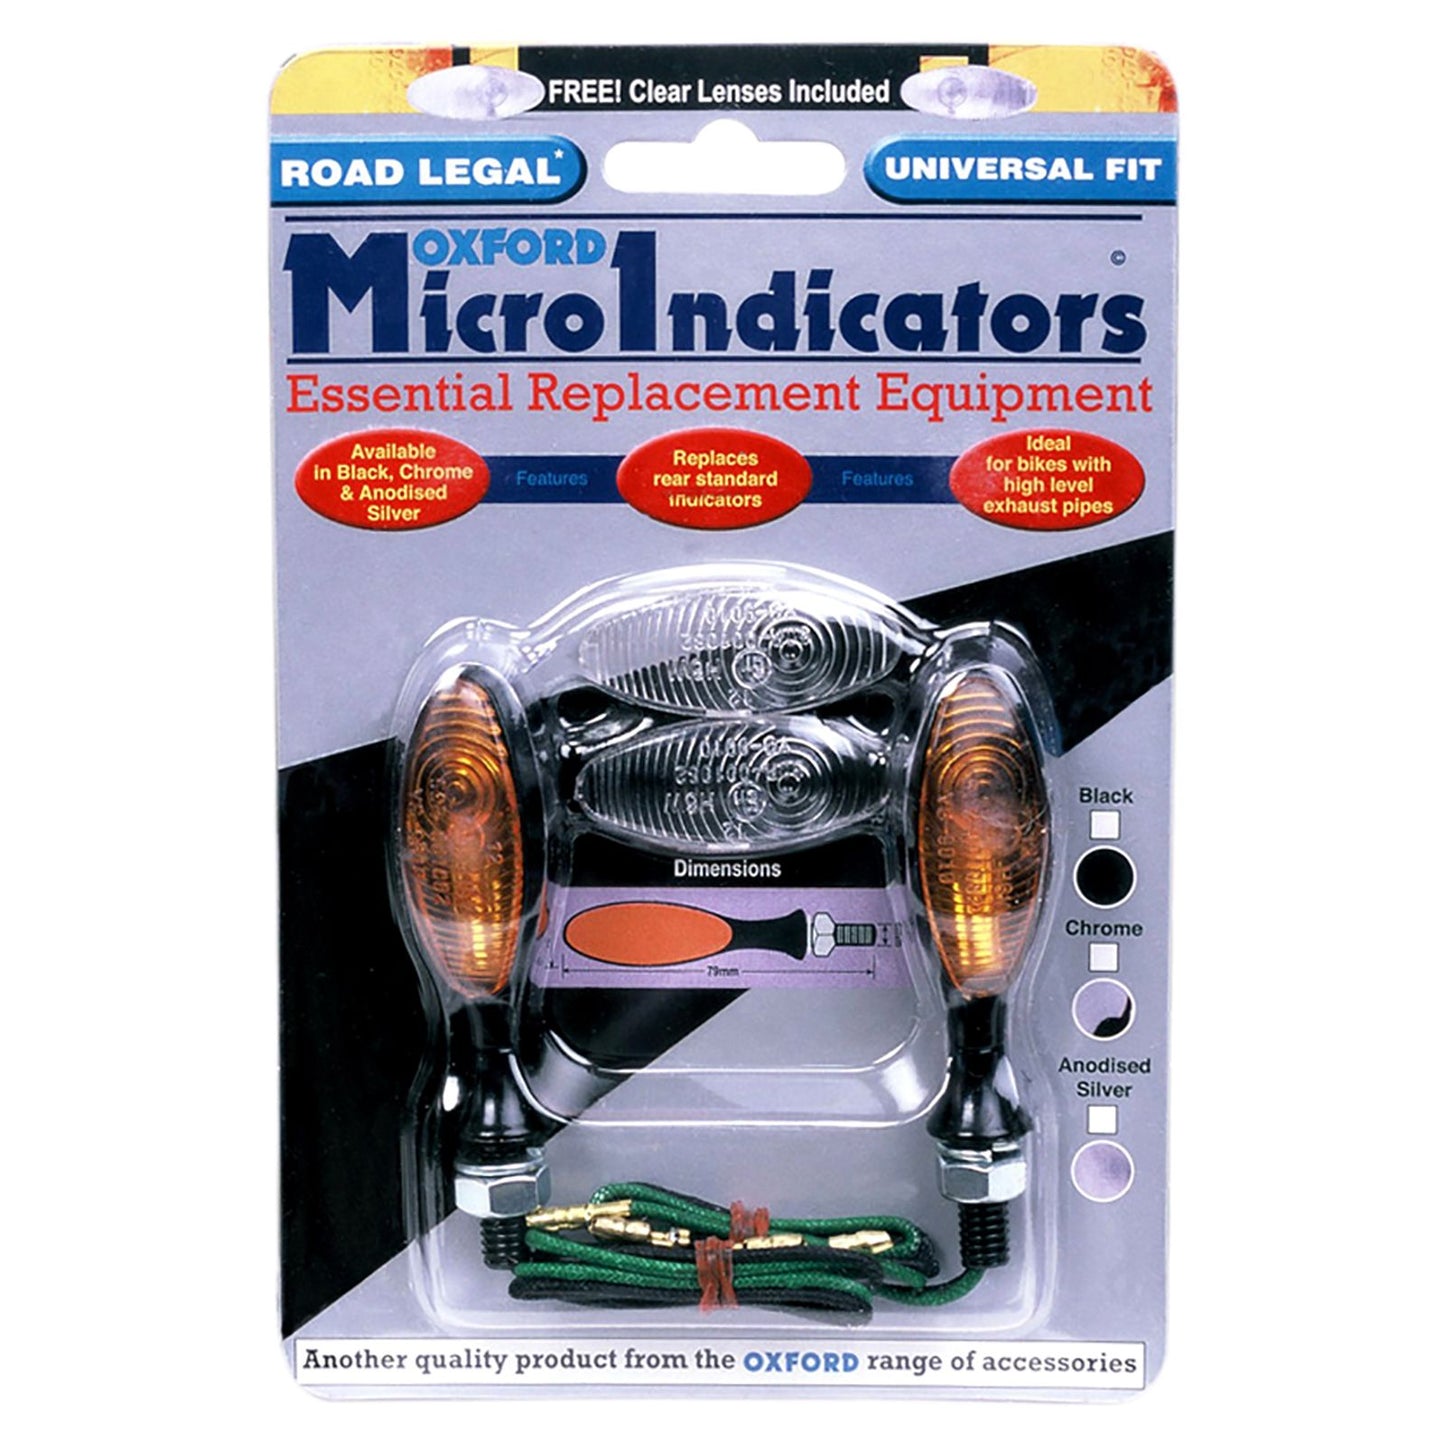 Oxford Micro Indicators (set of two indicators)